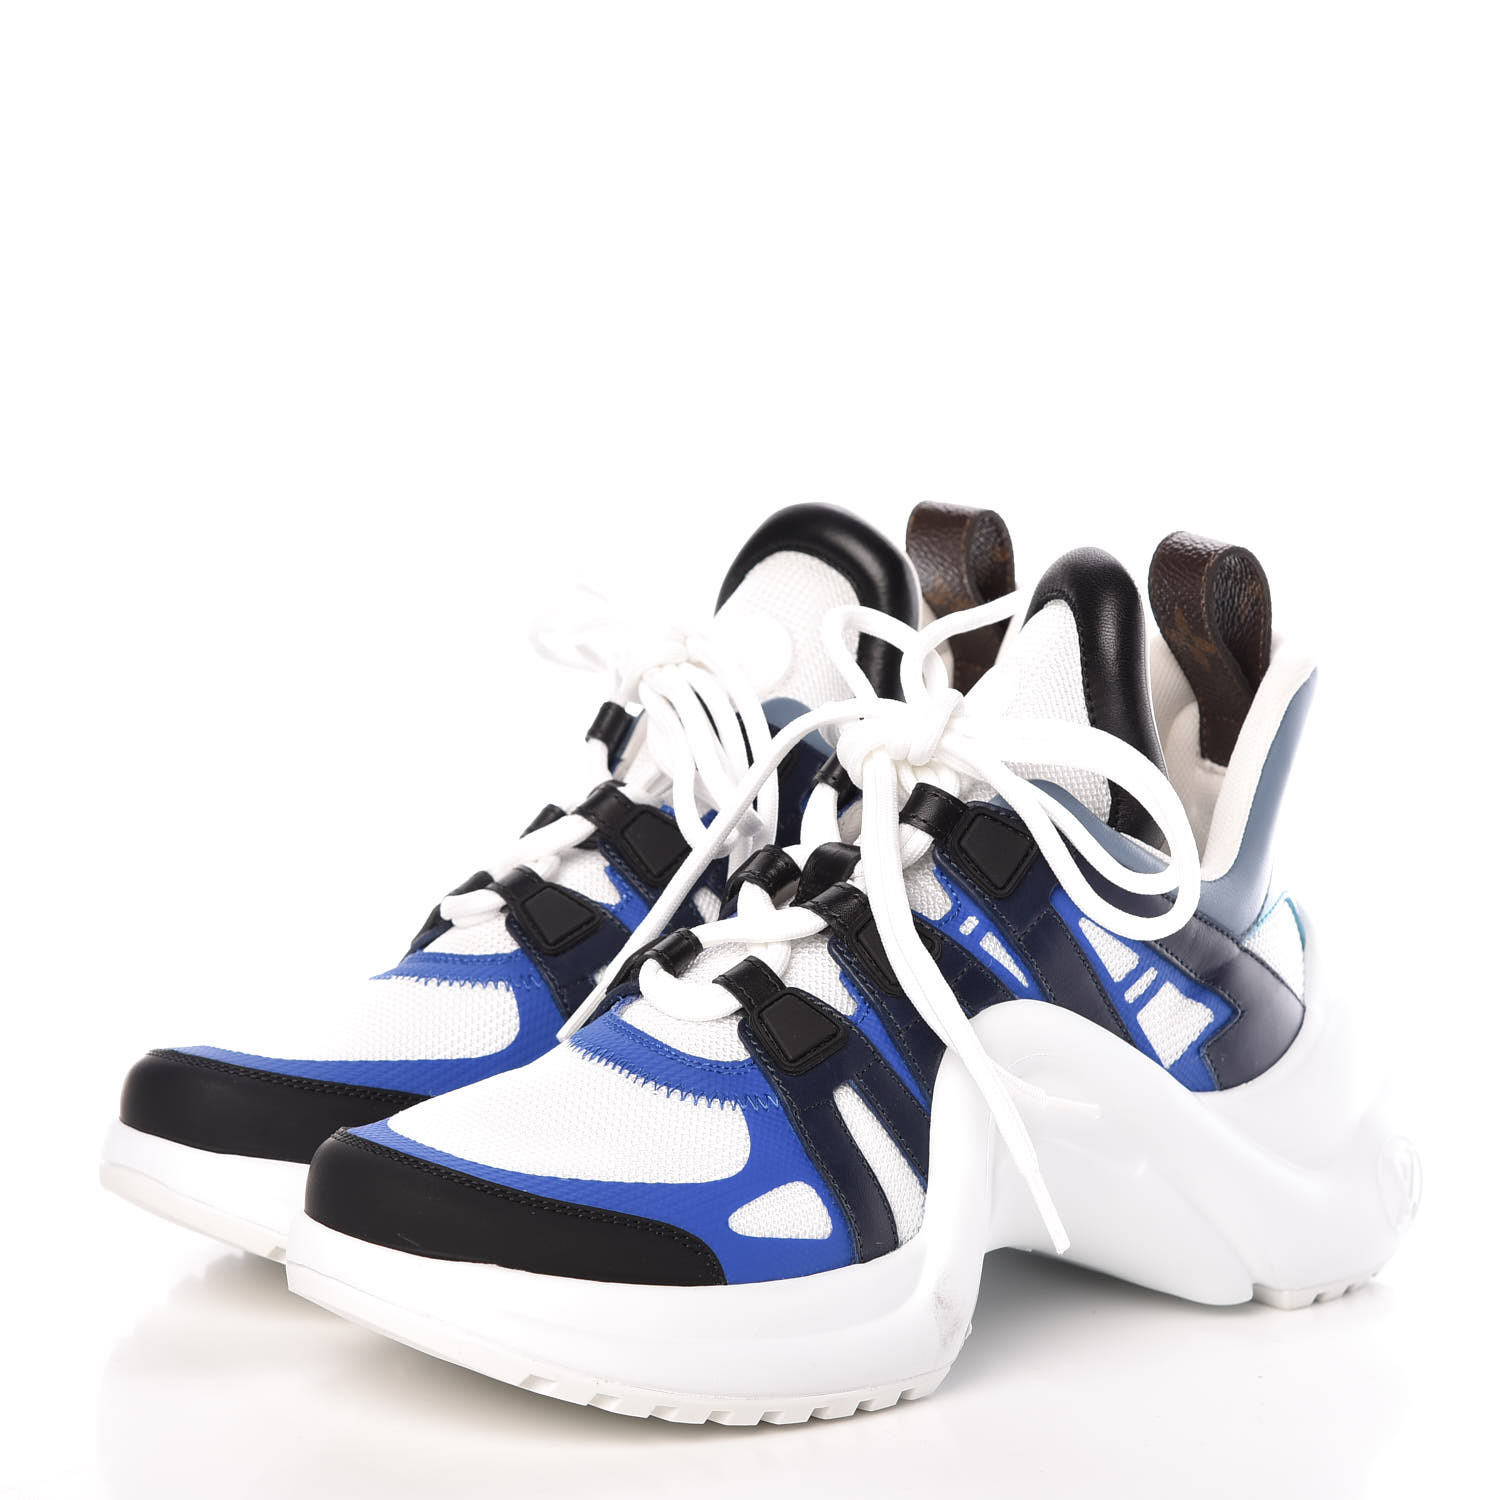 Louis Vuitton Calfskin Patent Monogram LV Archlight Sneaker Size 37